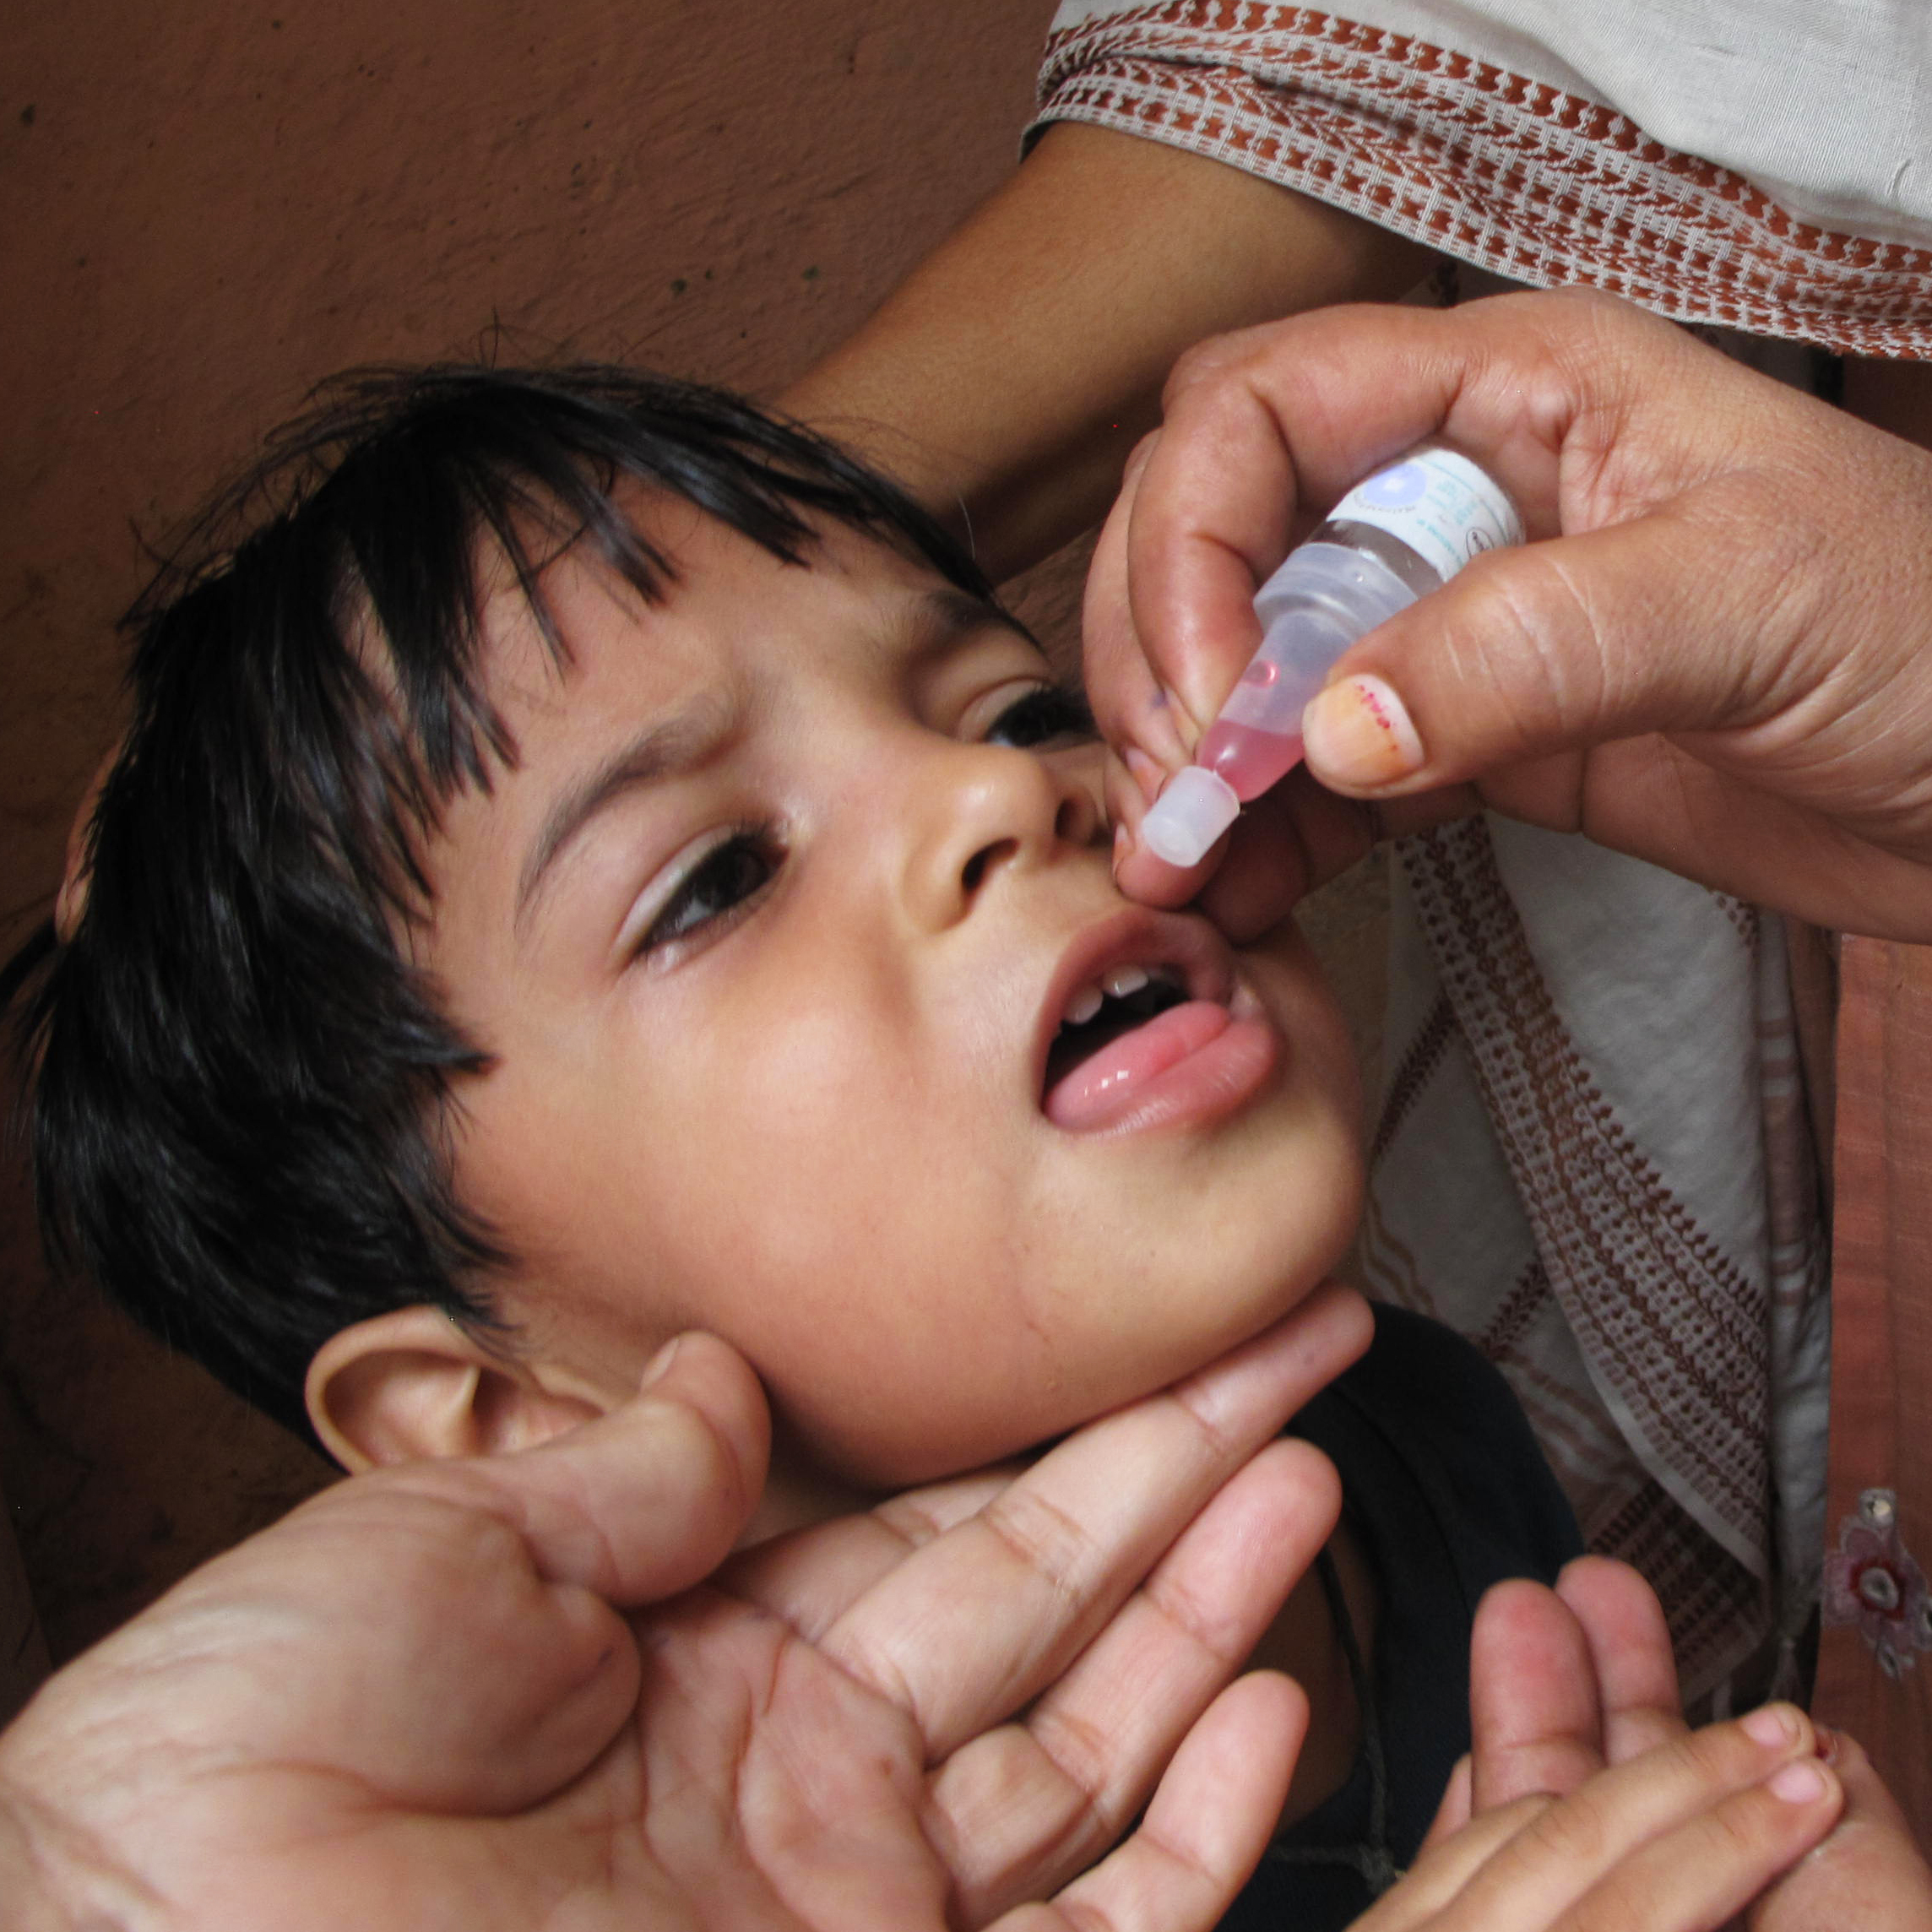 India defeats polio, global eradication efforts advance.